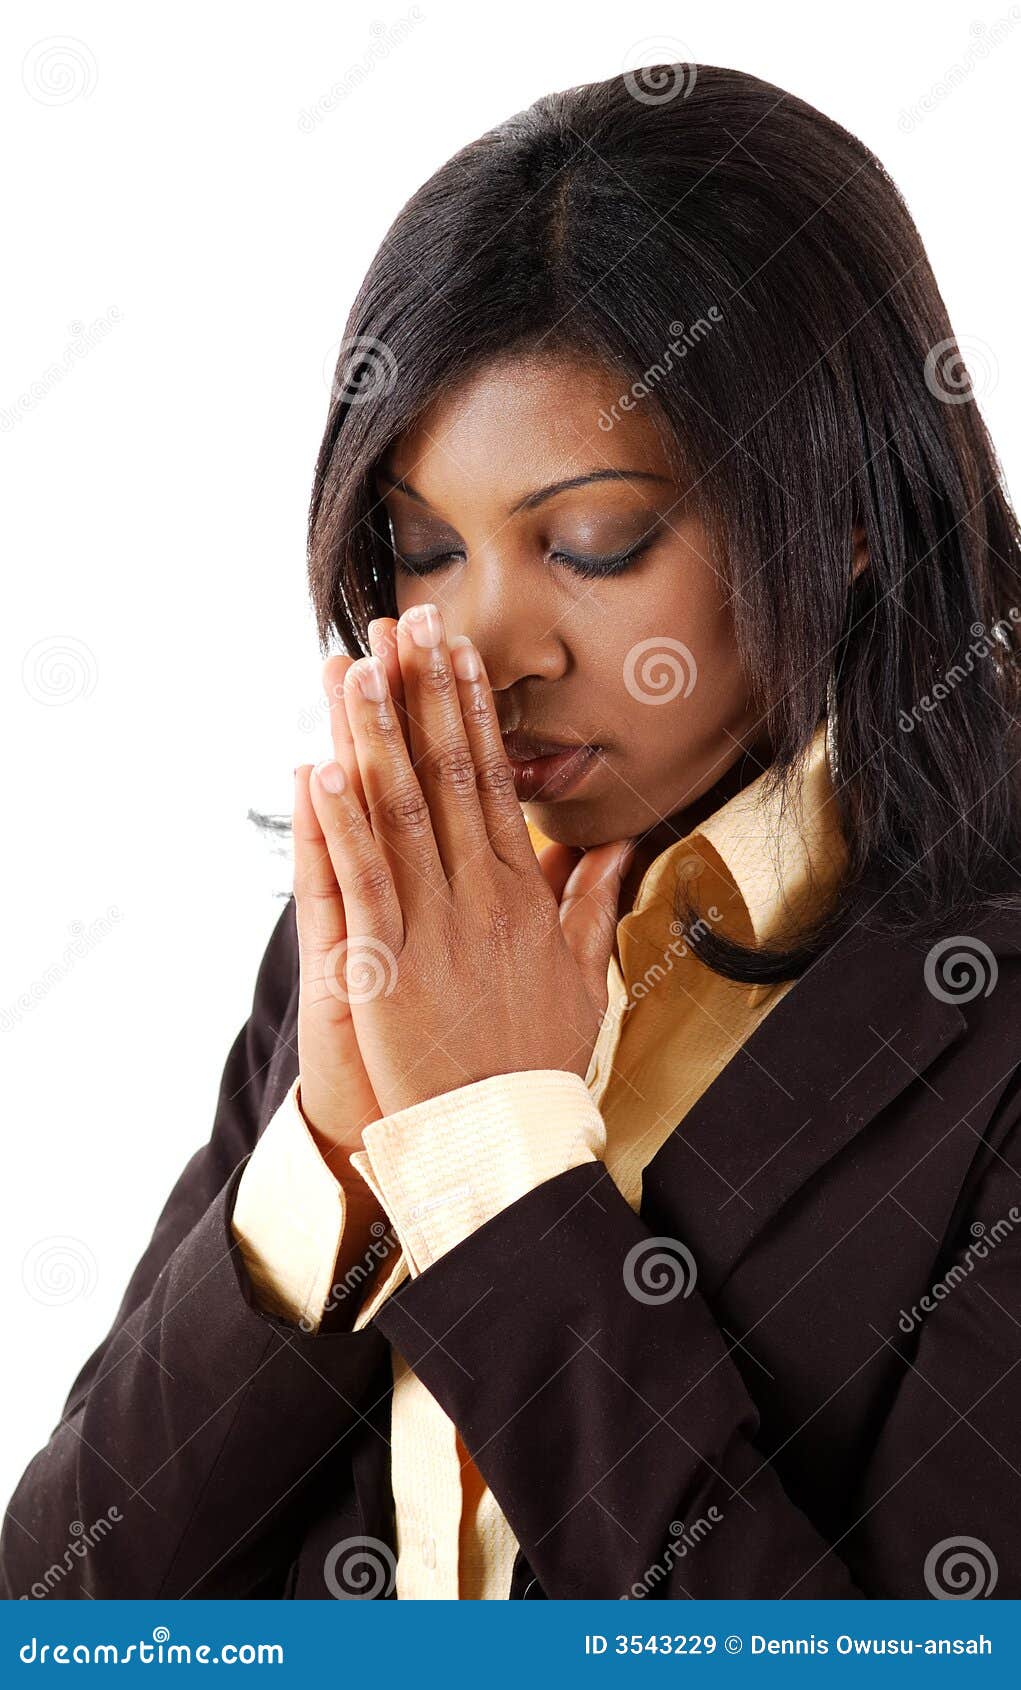 prayerful woman